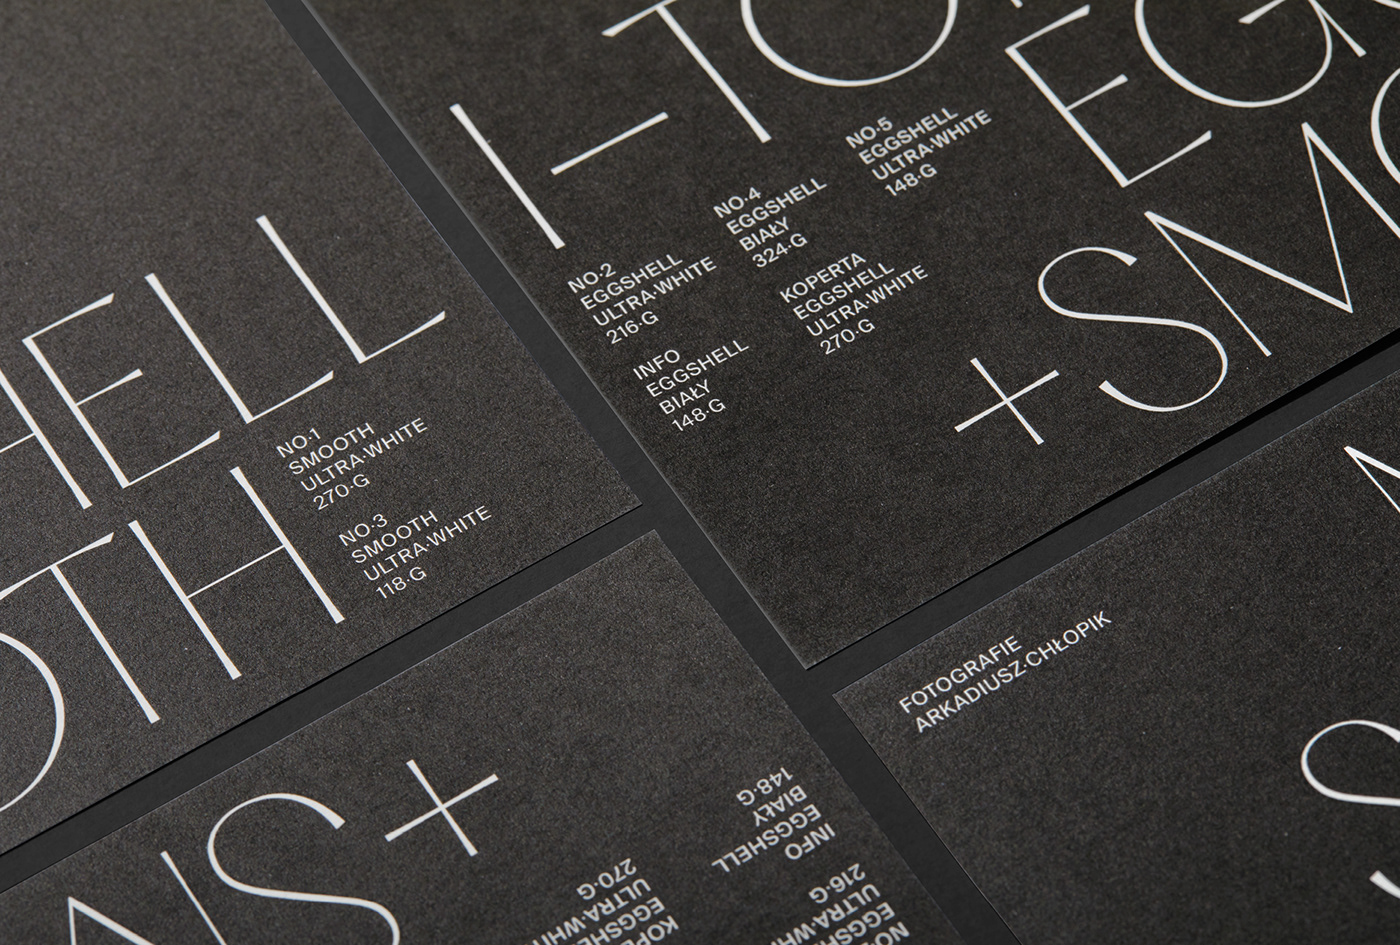 Antalis black and white envelope mohawk paper paper samlper typography  